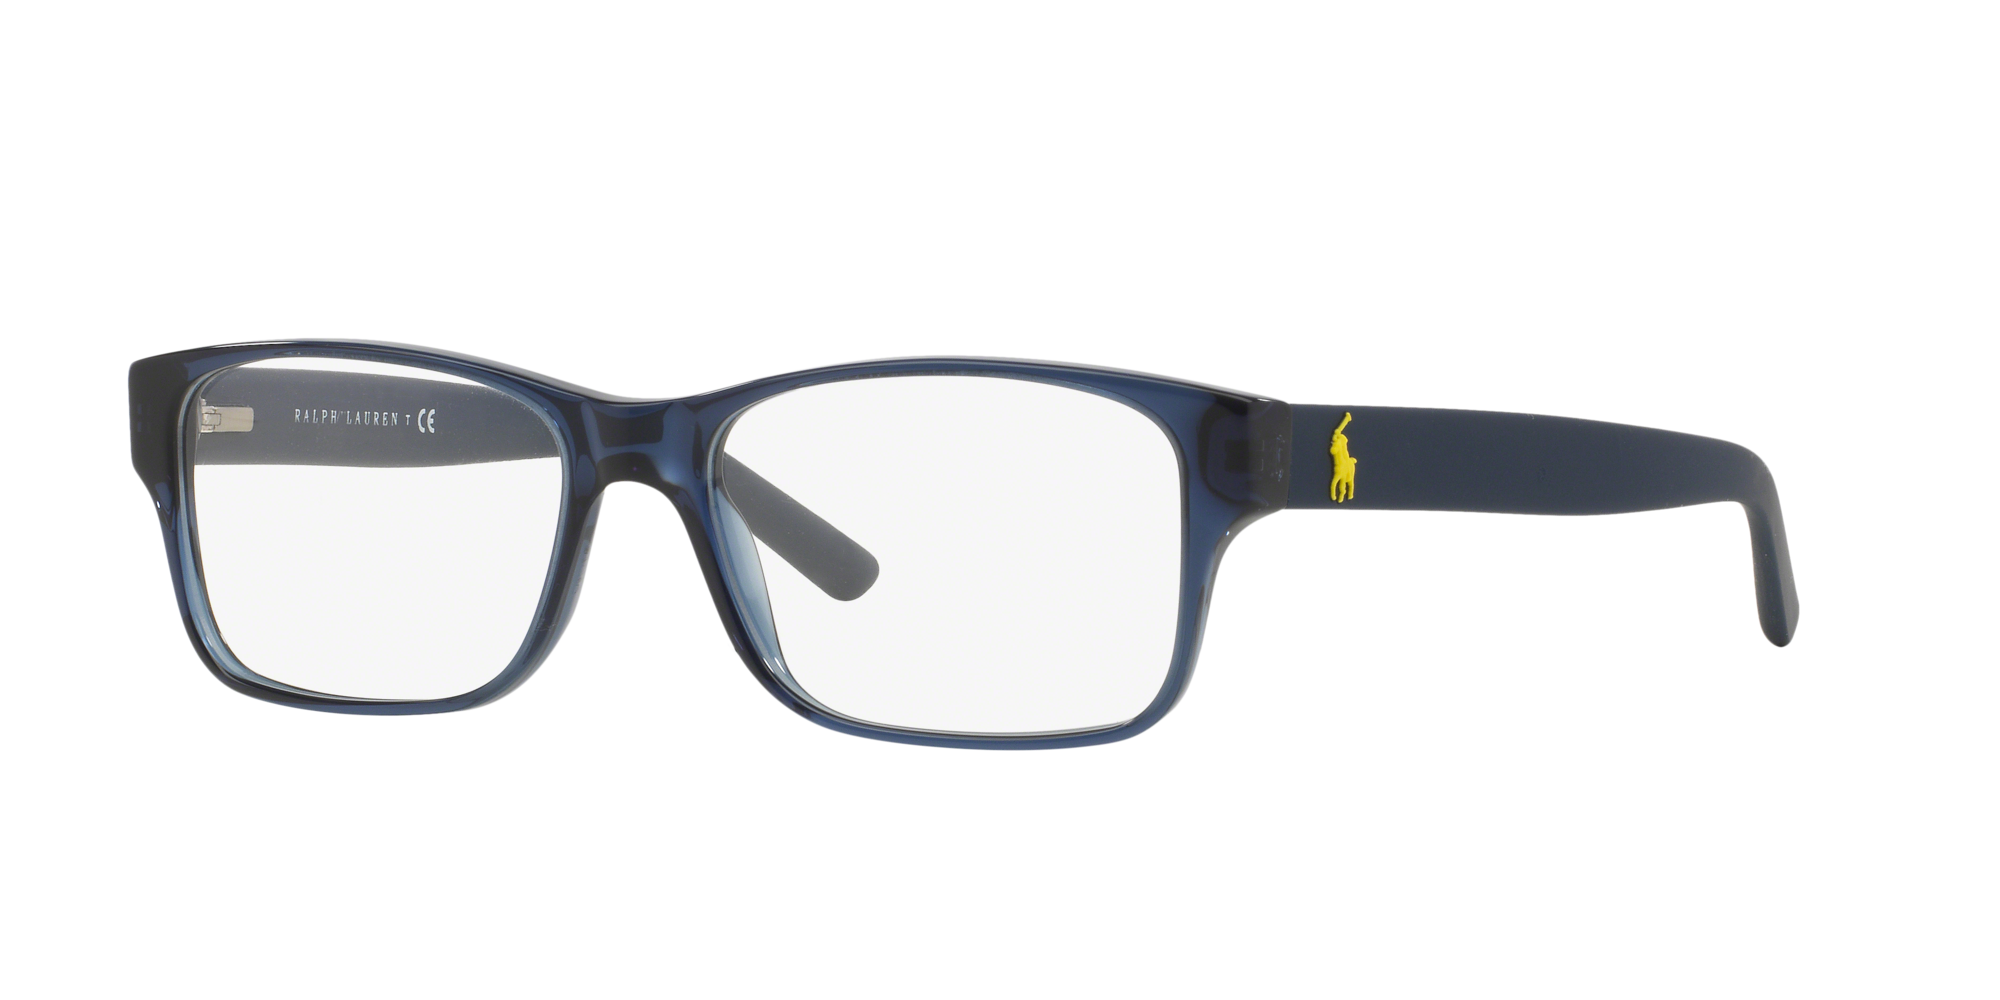 Angle_Left01 Polo Ralph Lauren PH 2117 (5470) Glasses Transparent / Navy